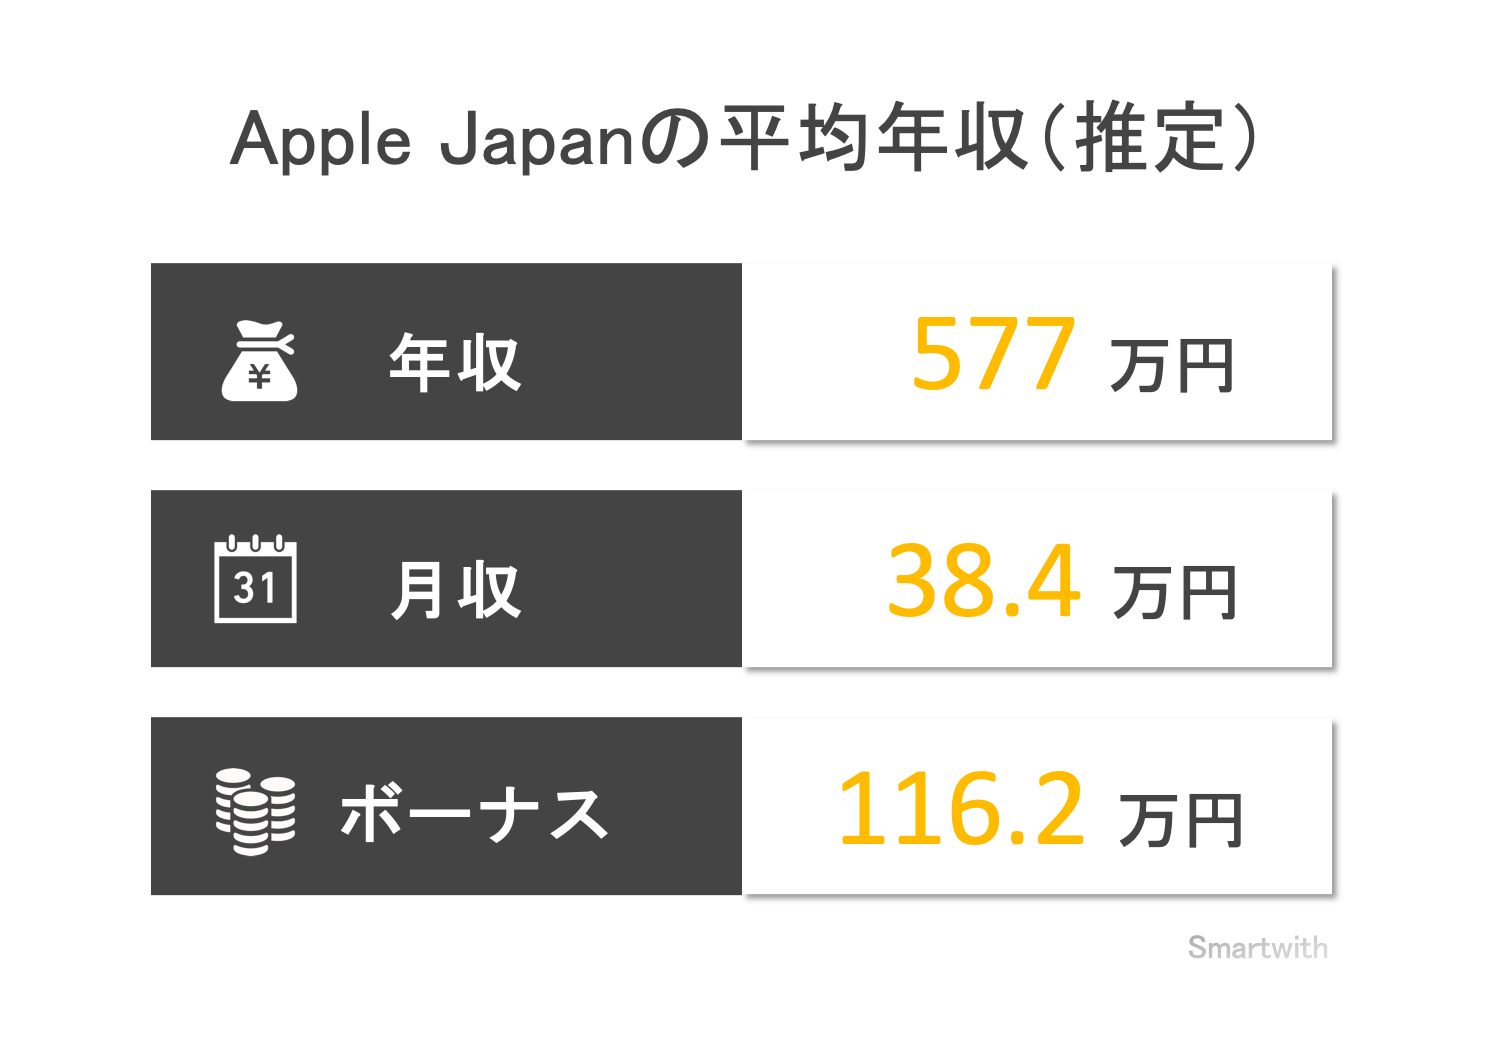 Apple Japan アップルジャパン の平均年収はいくら 社長の年収も解説 Career Media キャリアメディア